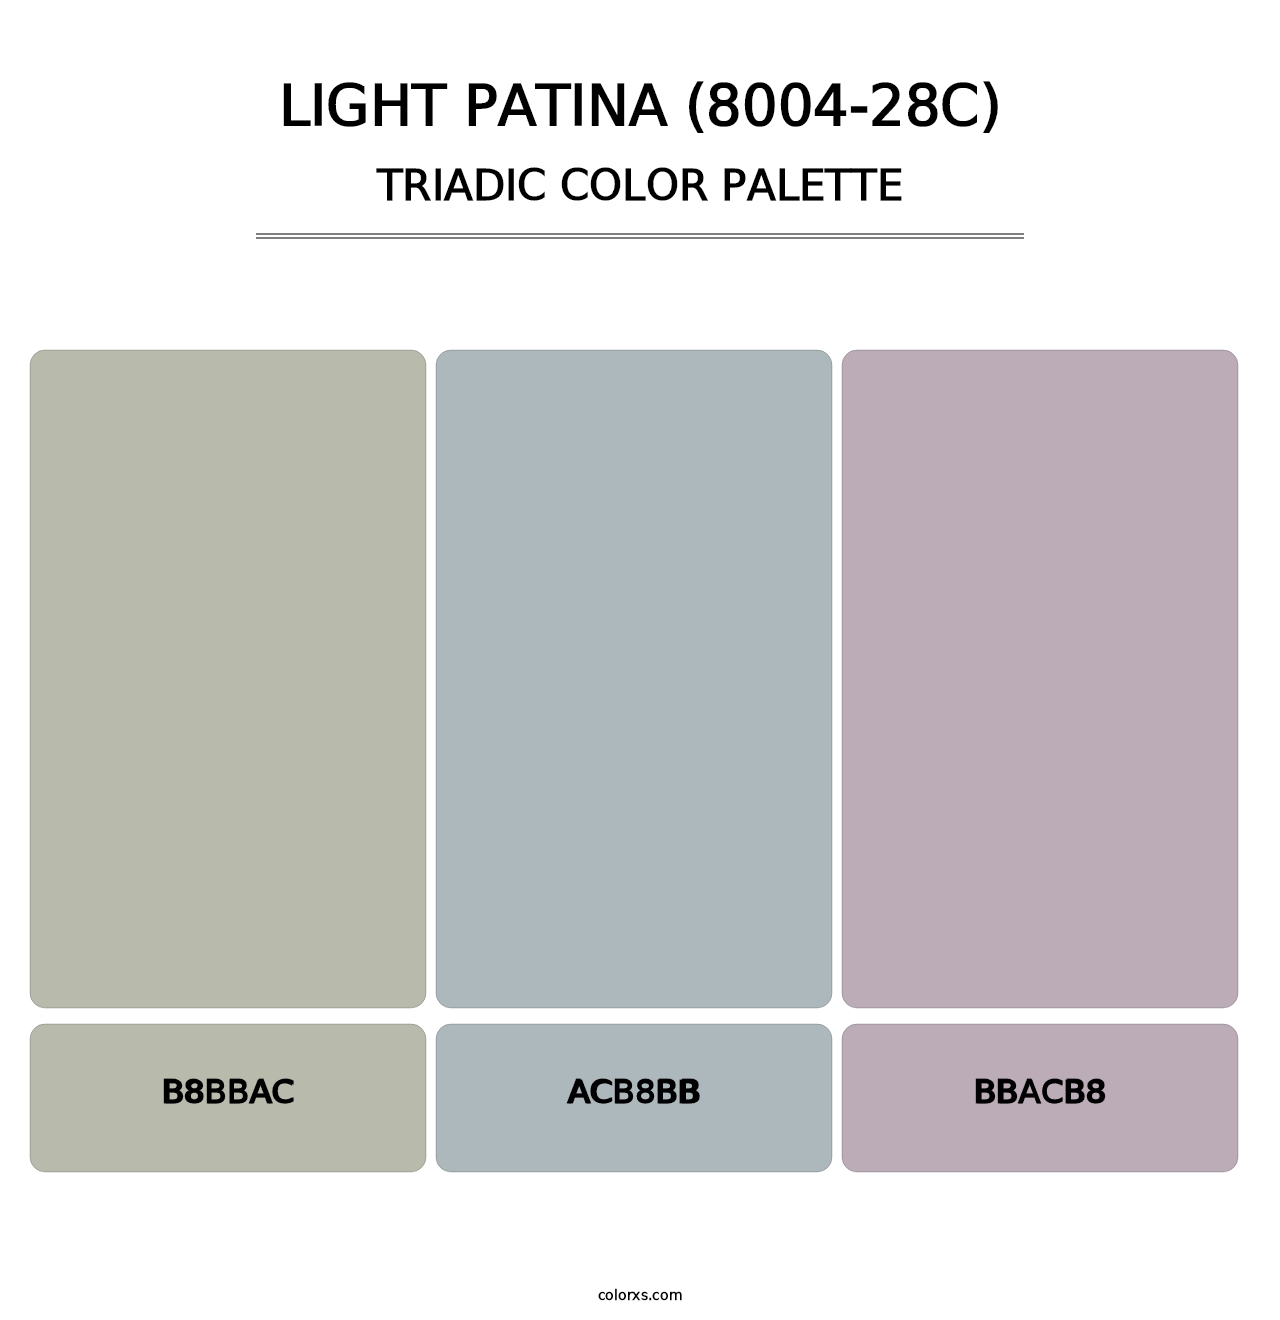 Light Patina (8004-28C) - Triadic Color Palette